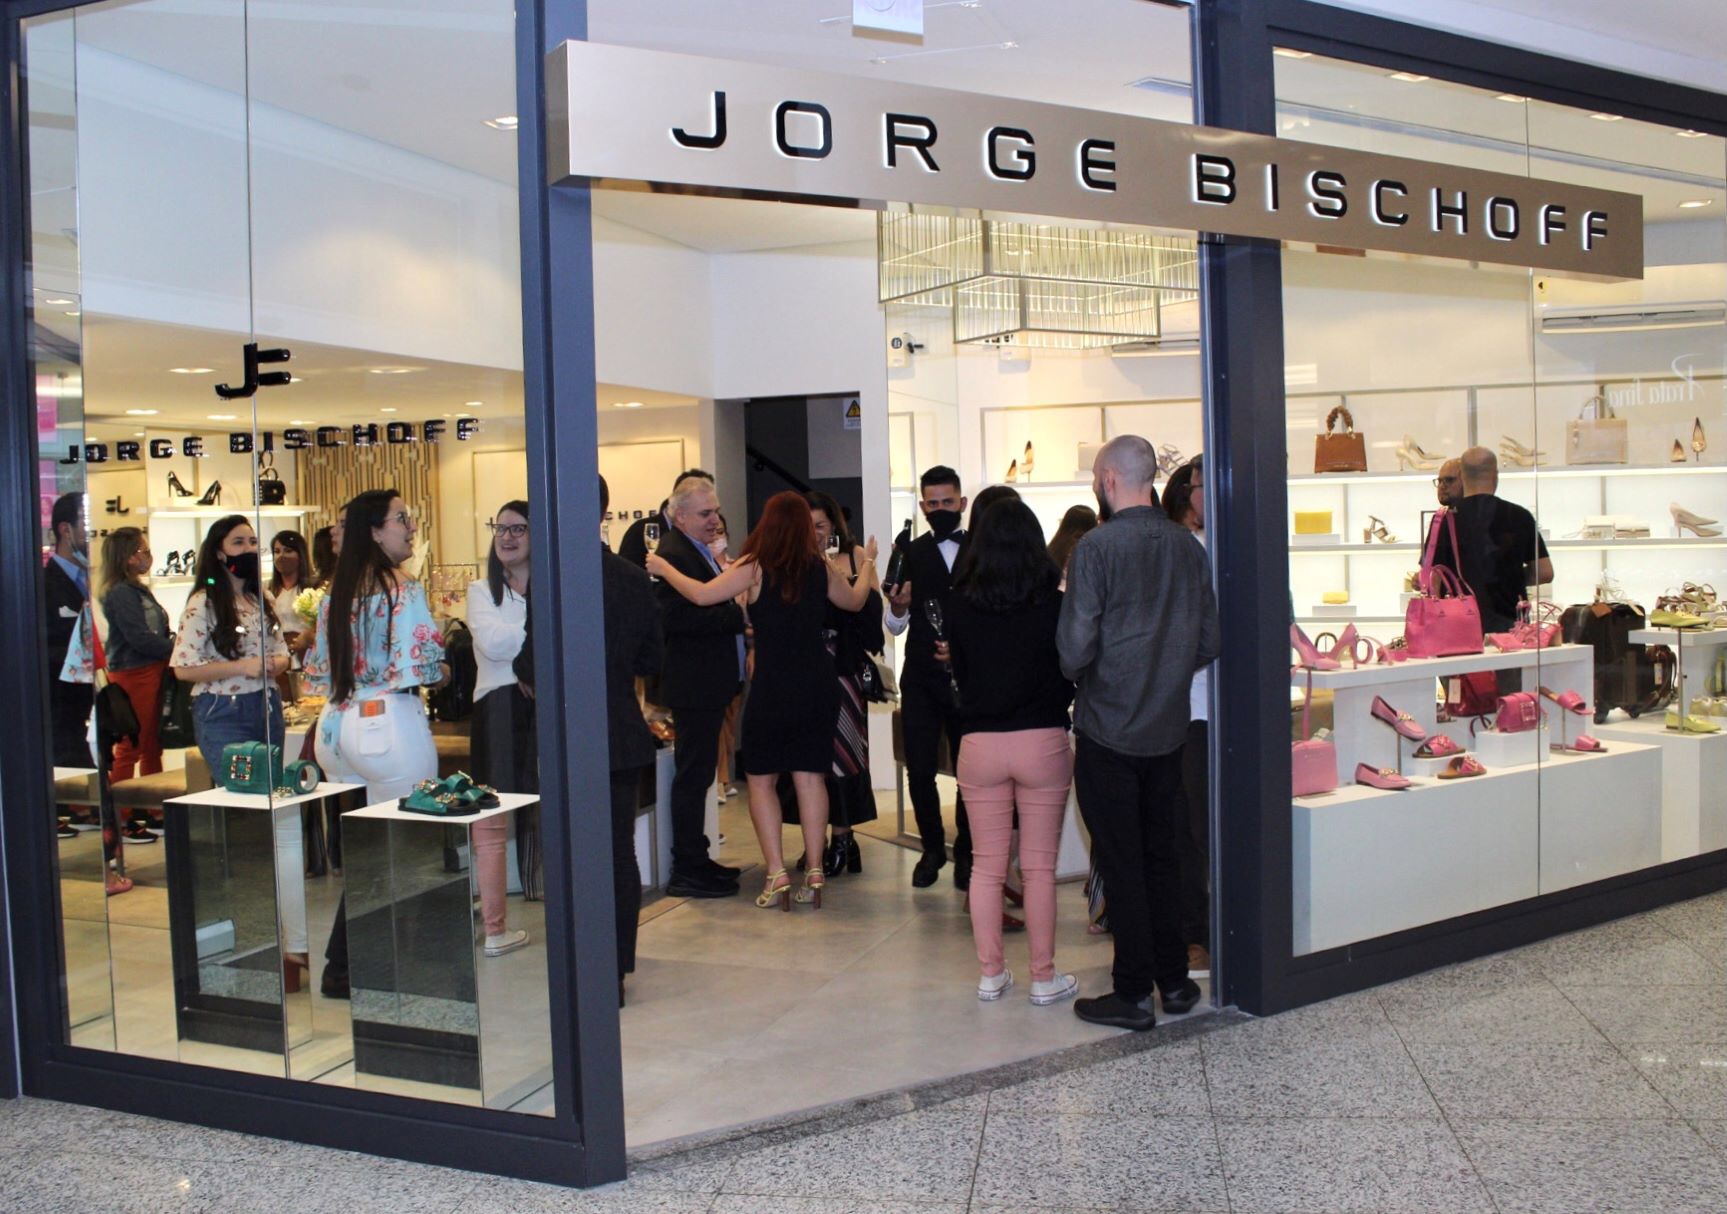 Itajaí Shopping recebe loja exclusiva da grife Jorge Bischoff